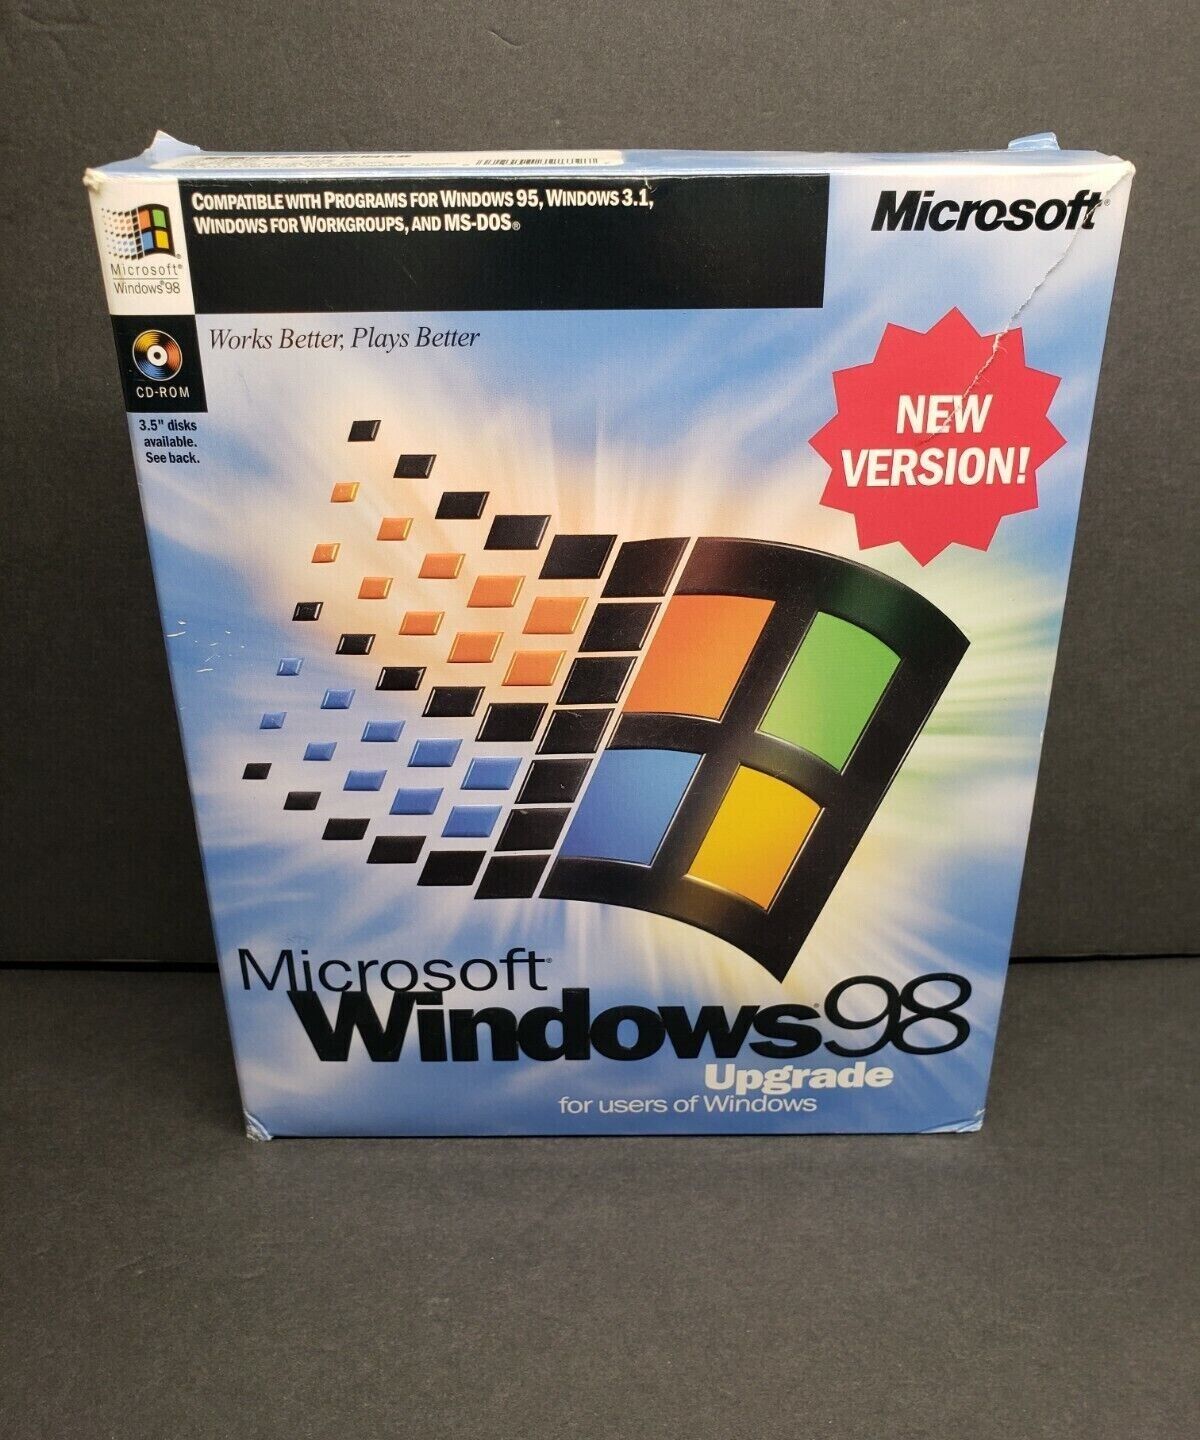 Genuine Microsoft Windows 98 Upgrade CD-ROM, manual in box